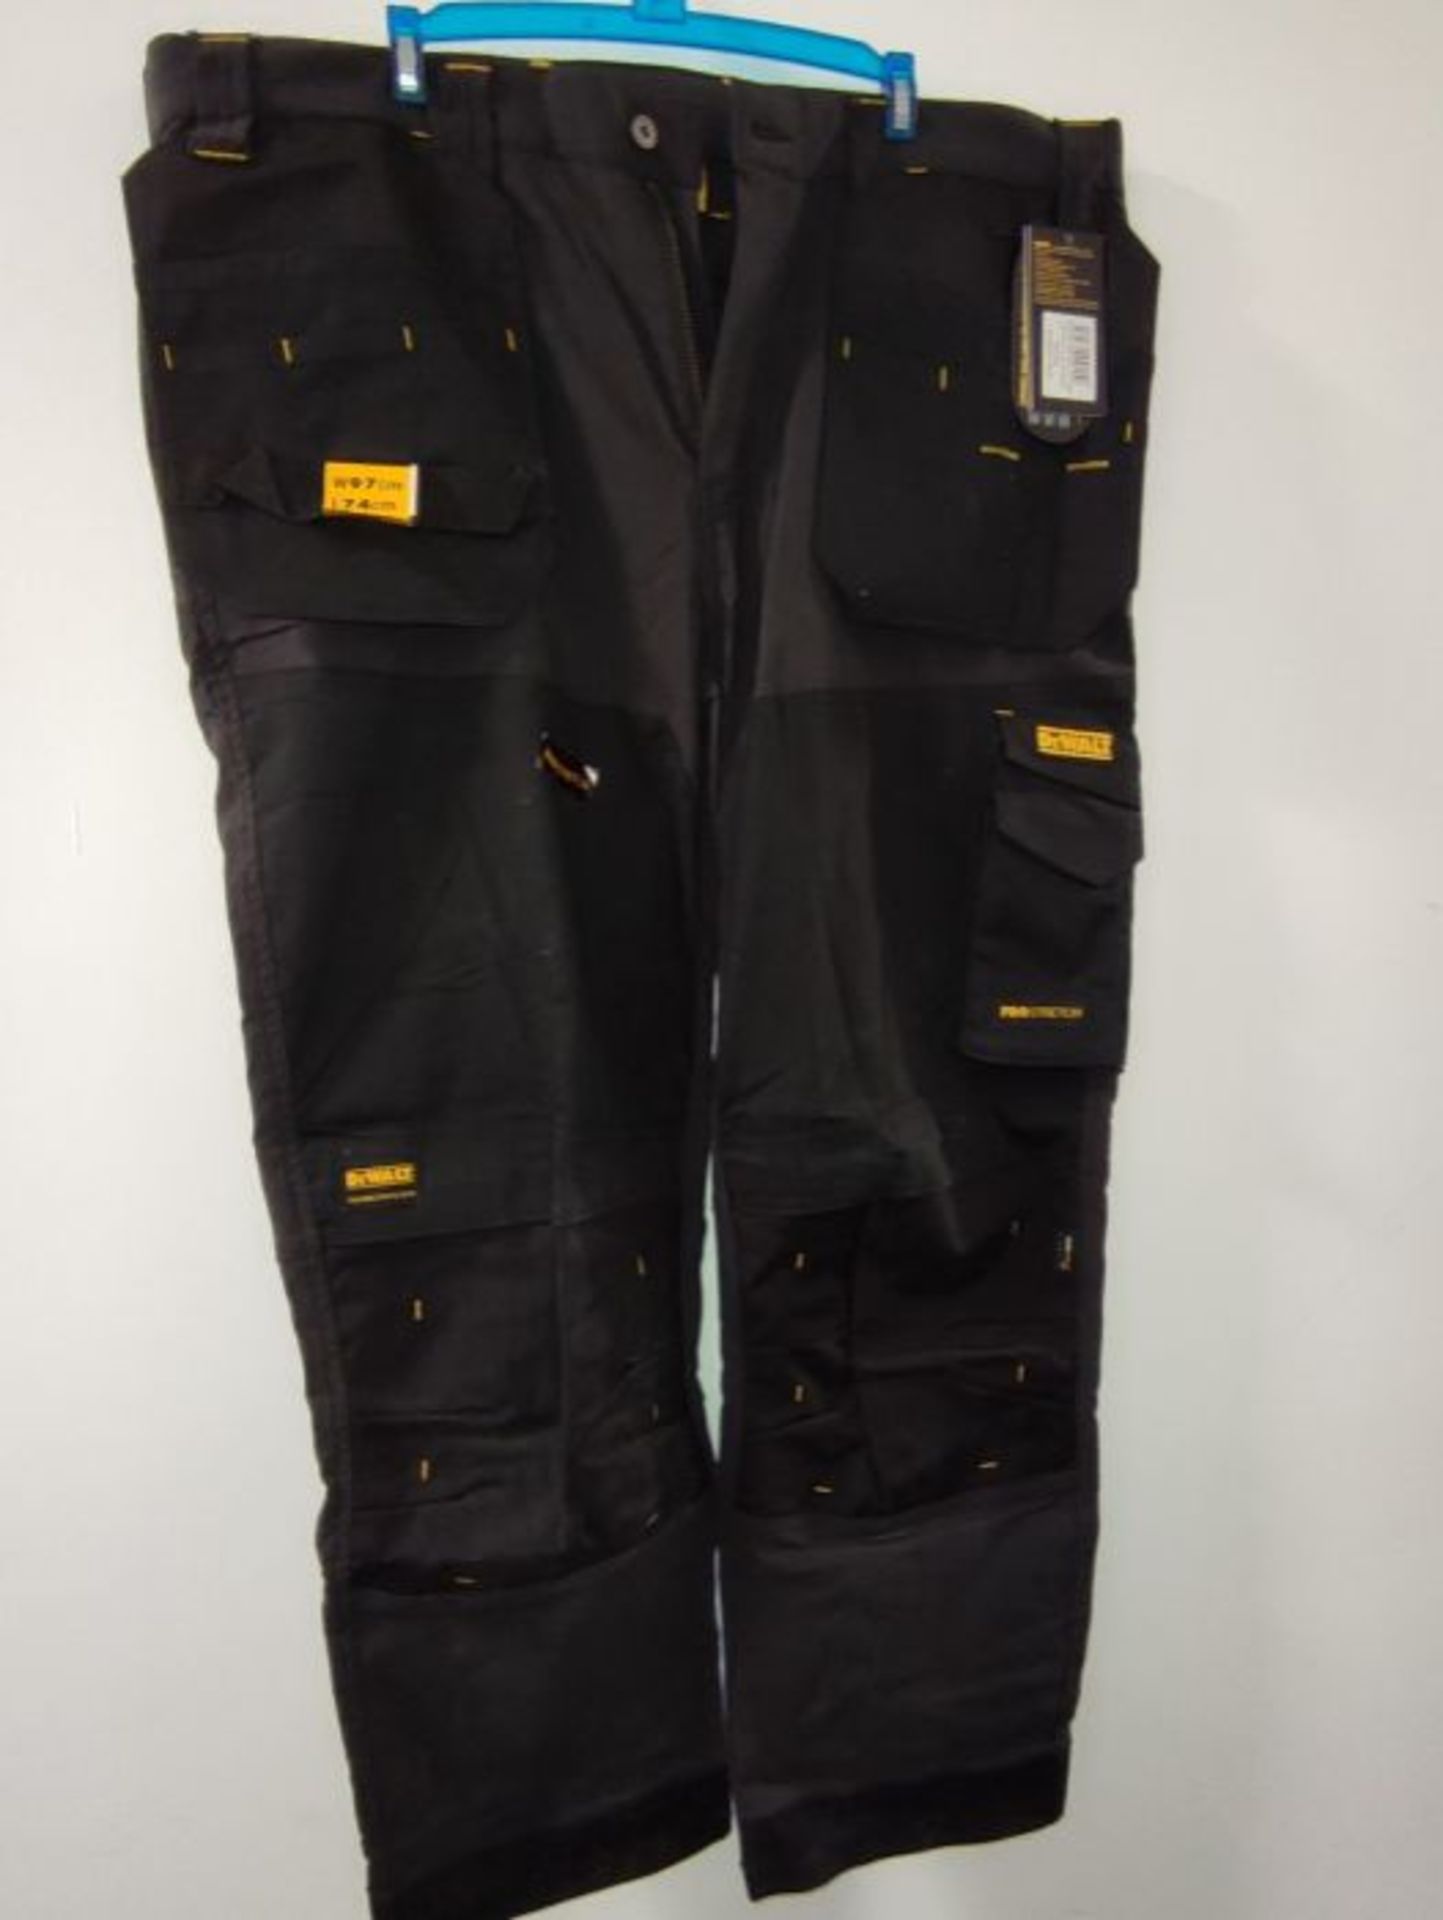 DEWALT Men's Dewmem3829-tb Memphis Holster Trousers Waist 38in Leg 29in, Black/Grey, 3 - Image 2 of 3